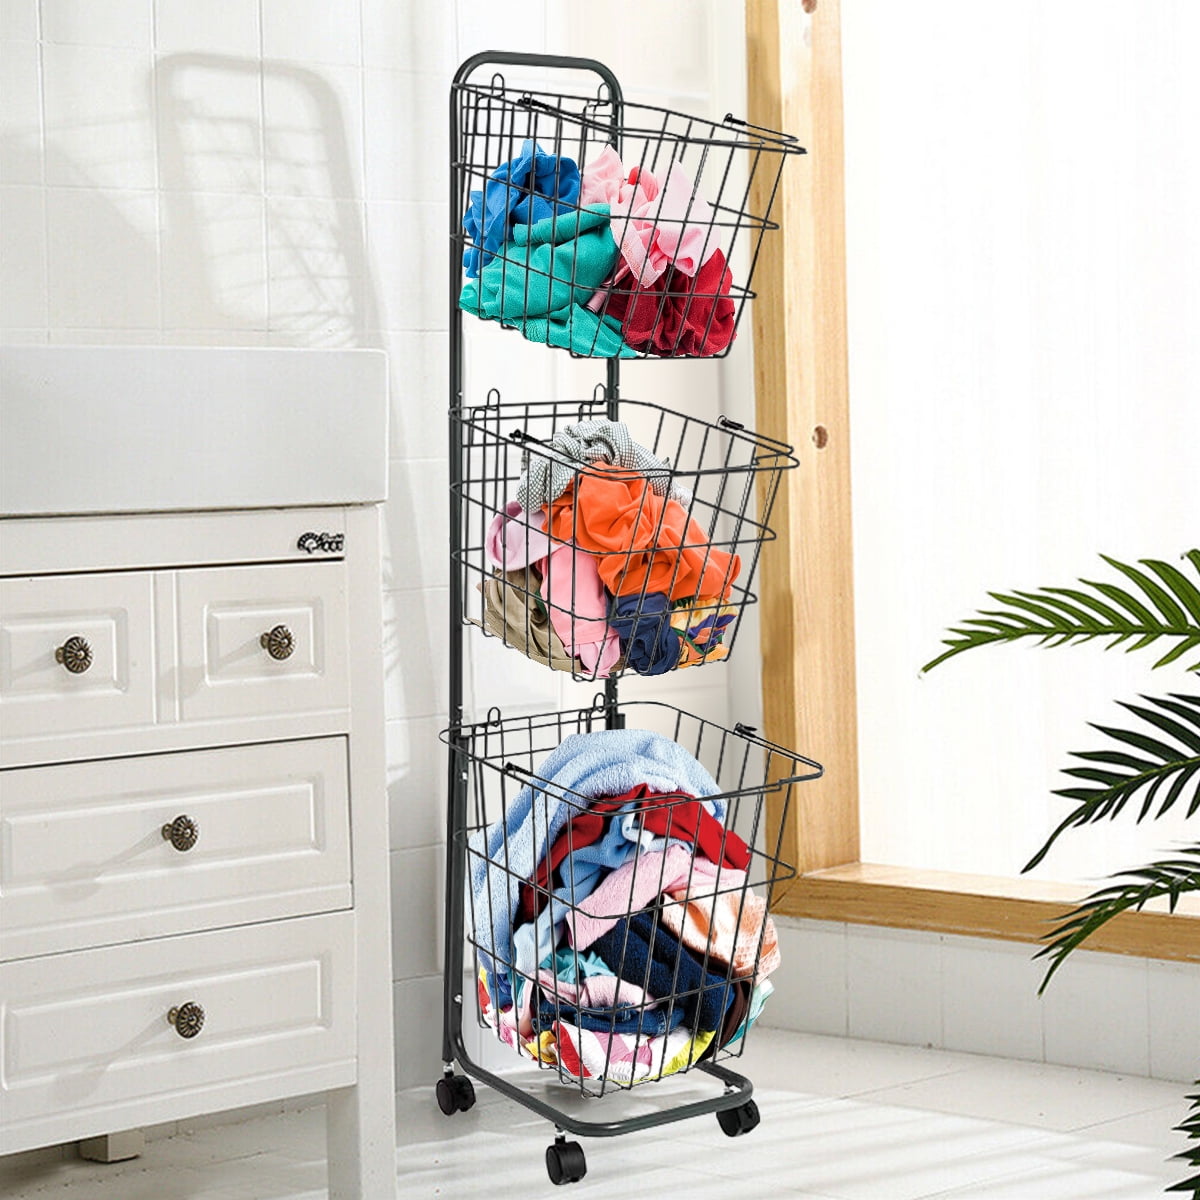 wire laundry basket on wheels